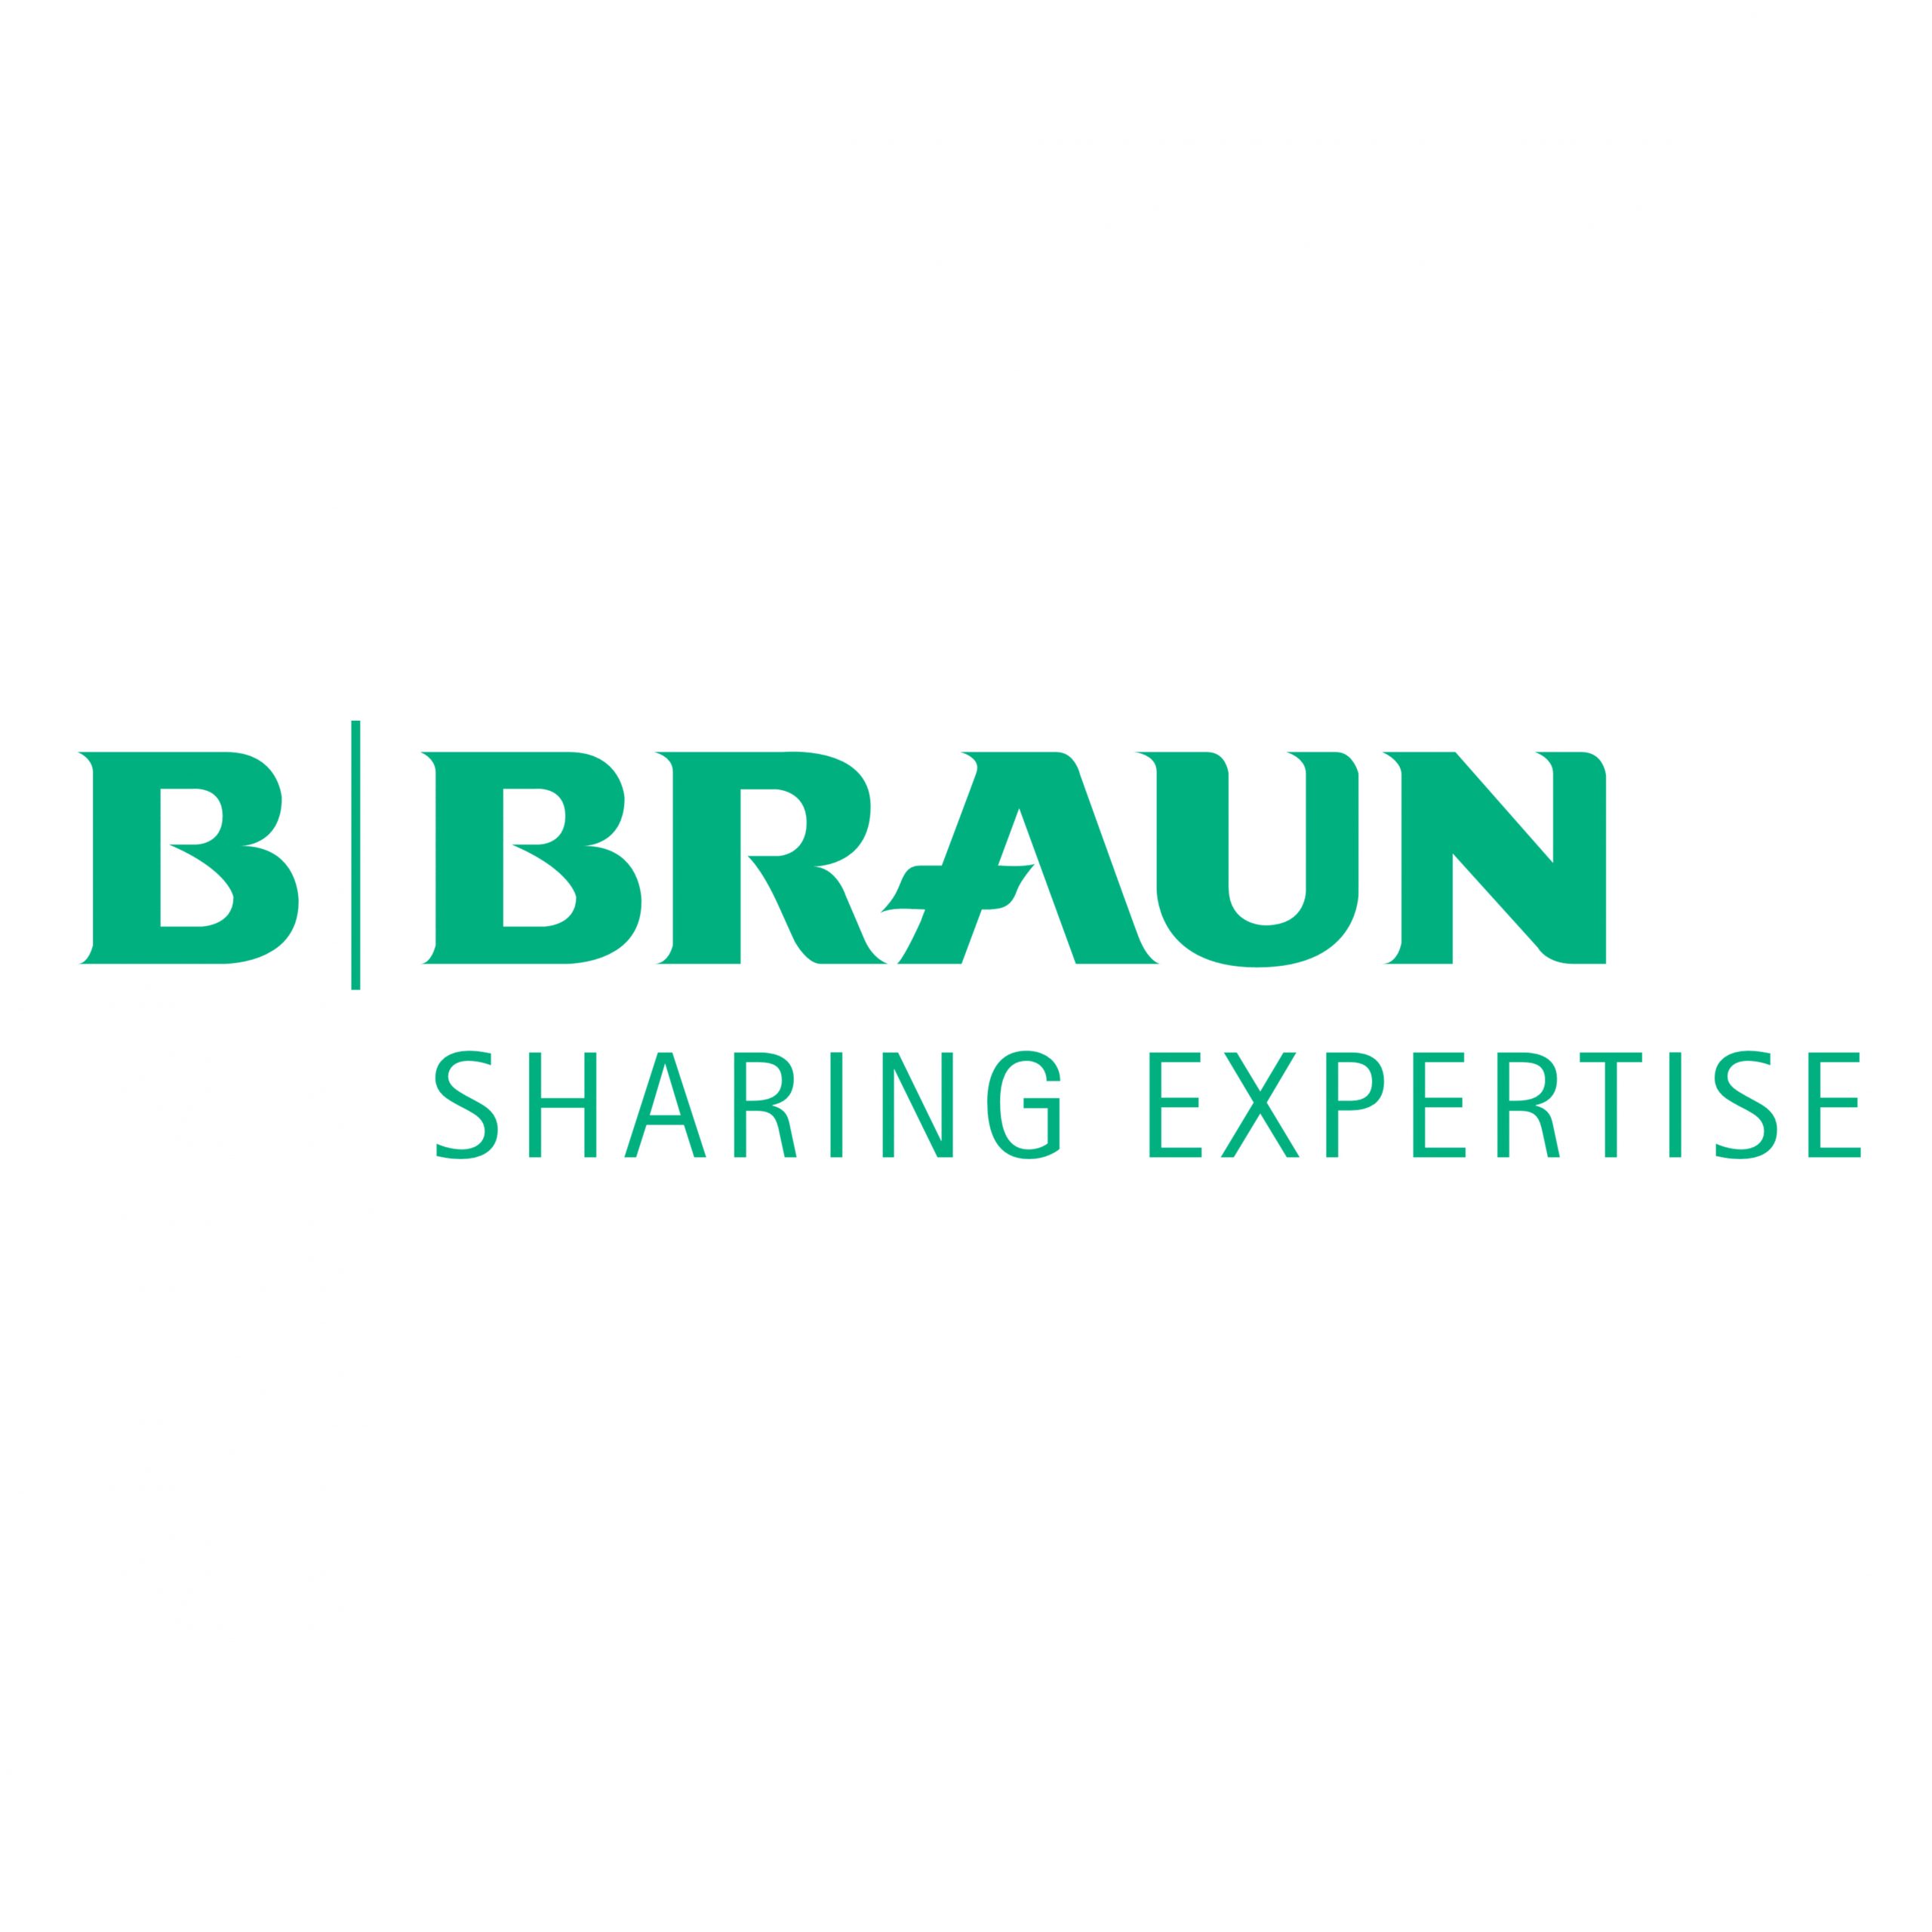 BBraun logo